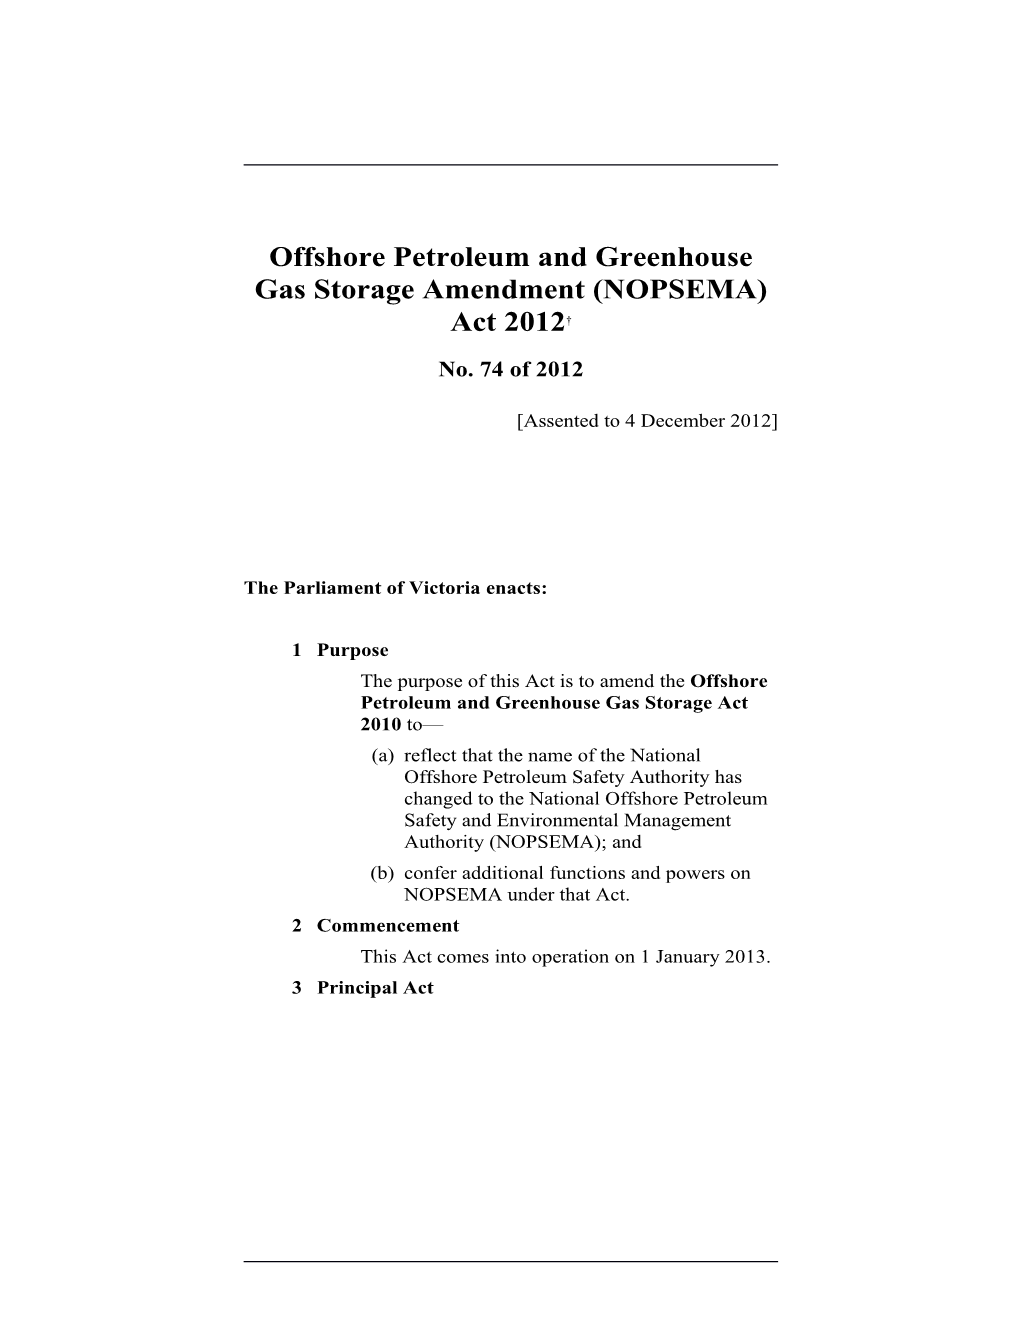 Offshore Petroleum and Greenhouse Gas Storage Amendment (NOPSEMA) Act 2012